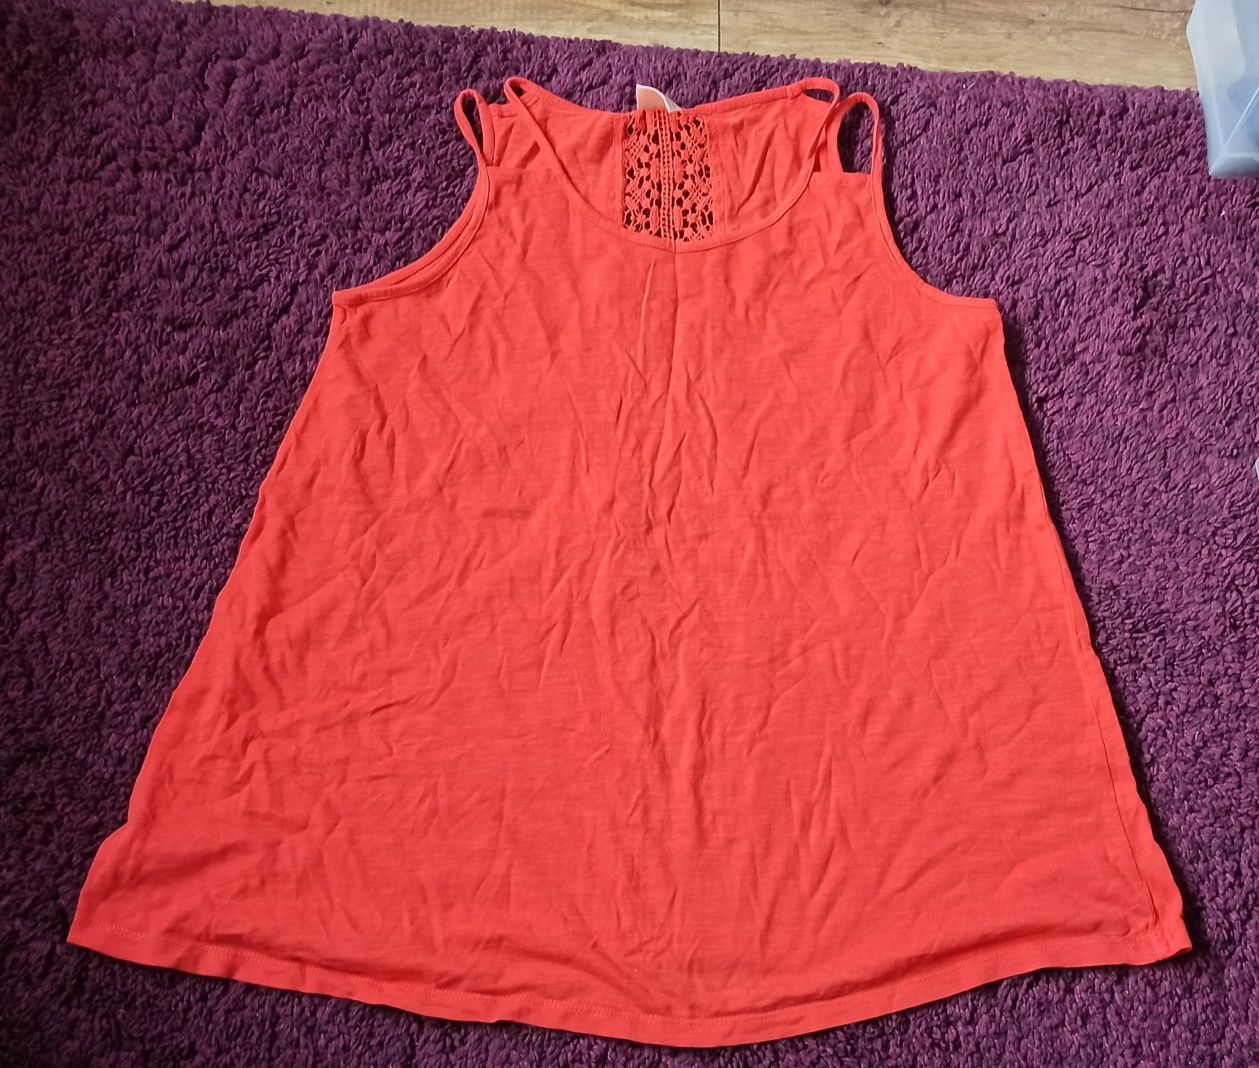 T-shirt Zara rozmiar164 cm, 13/14 lat